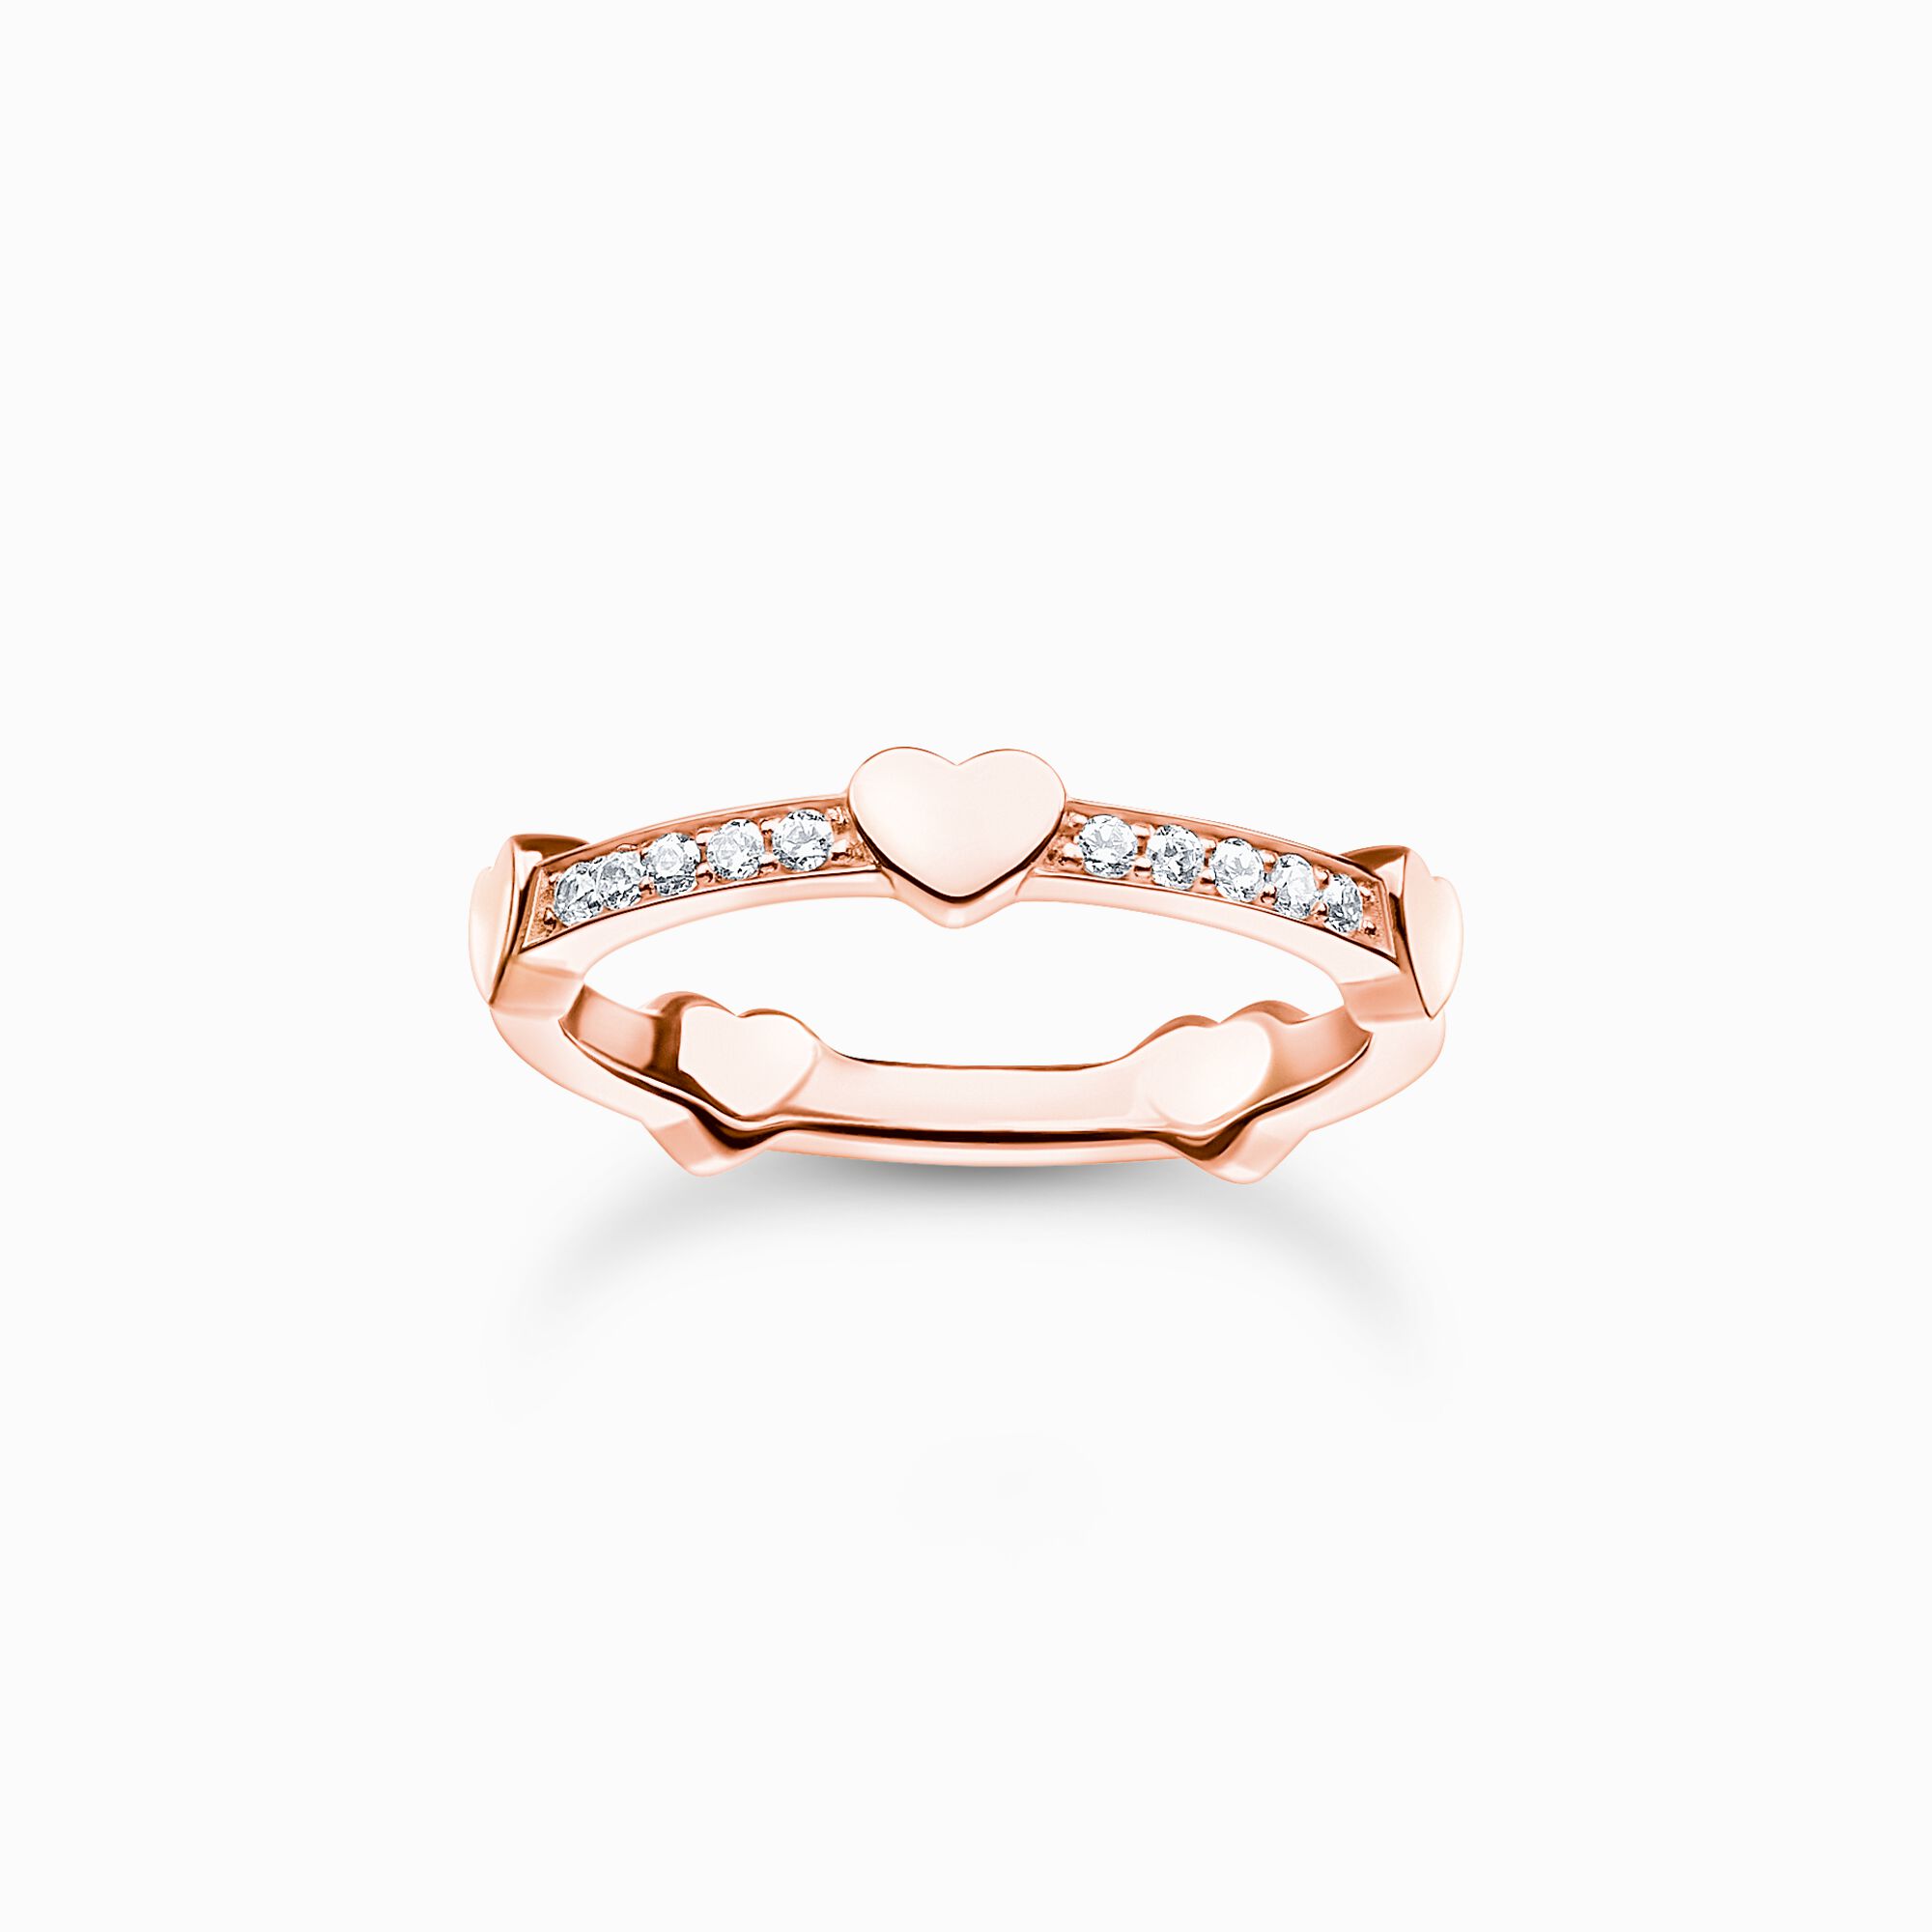 Ring with hearts: Rose gold plating & zirconia stones – THOMAS SABO